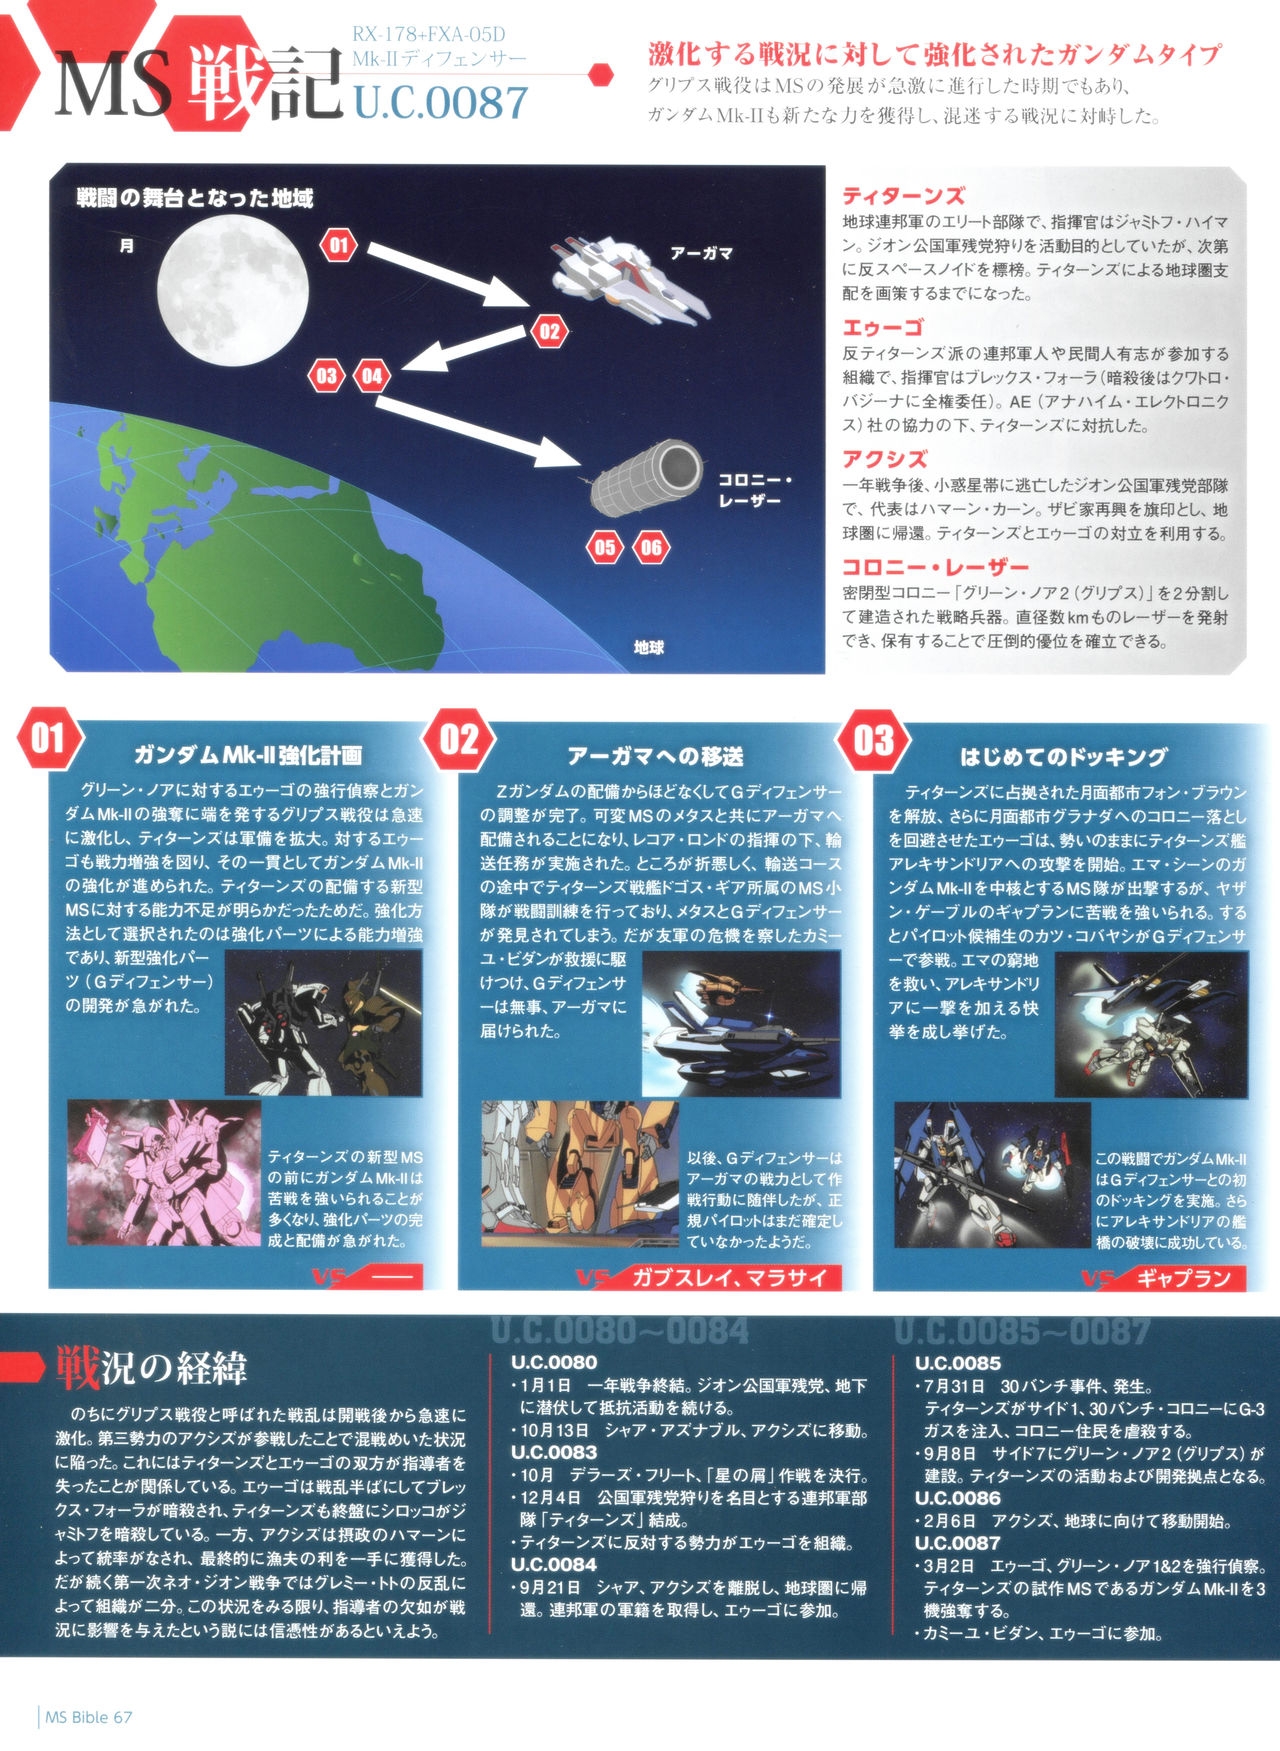 Gundam Mobile Suit Bible 67 20